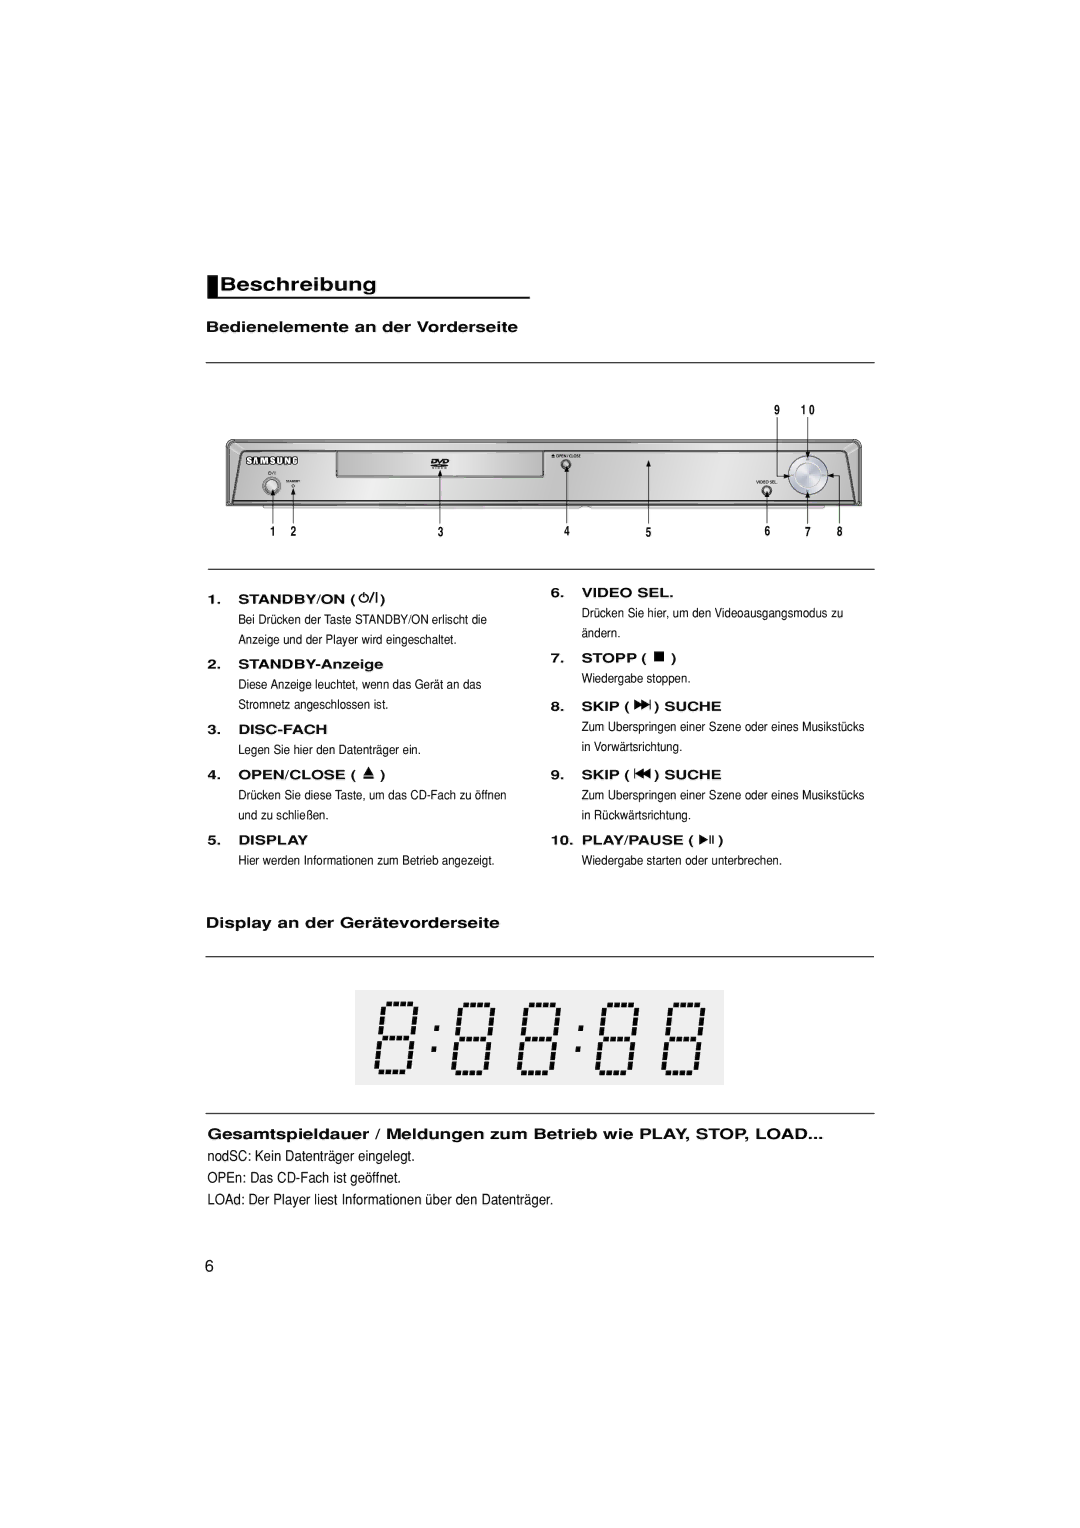 Samsung DVD-HD870/XEL, DVD-HD870/XEG manual Beschreibung, Bedienelemente an der Vorderseite, Disc-Fach, Display PLAY/PAUSE 